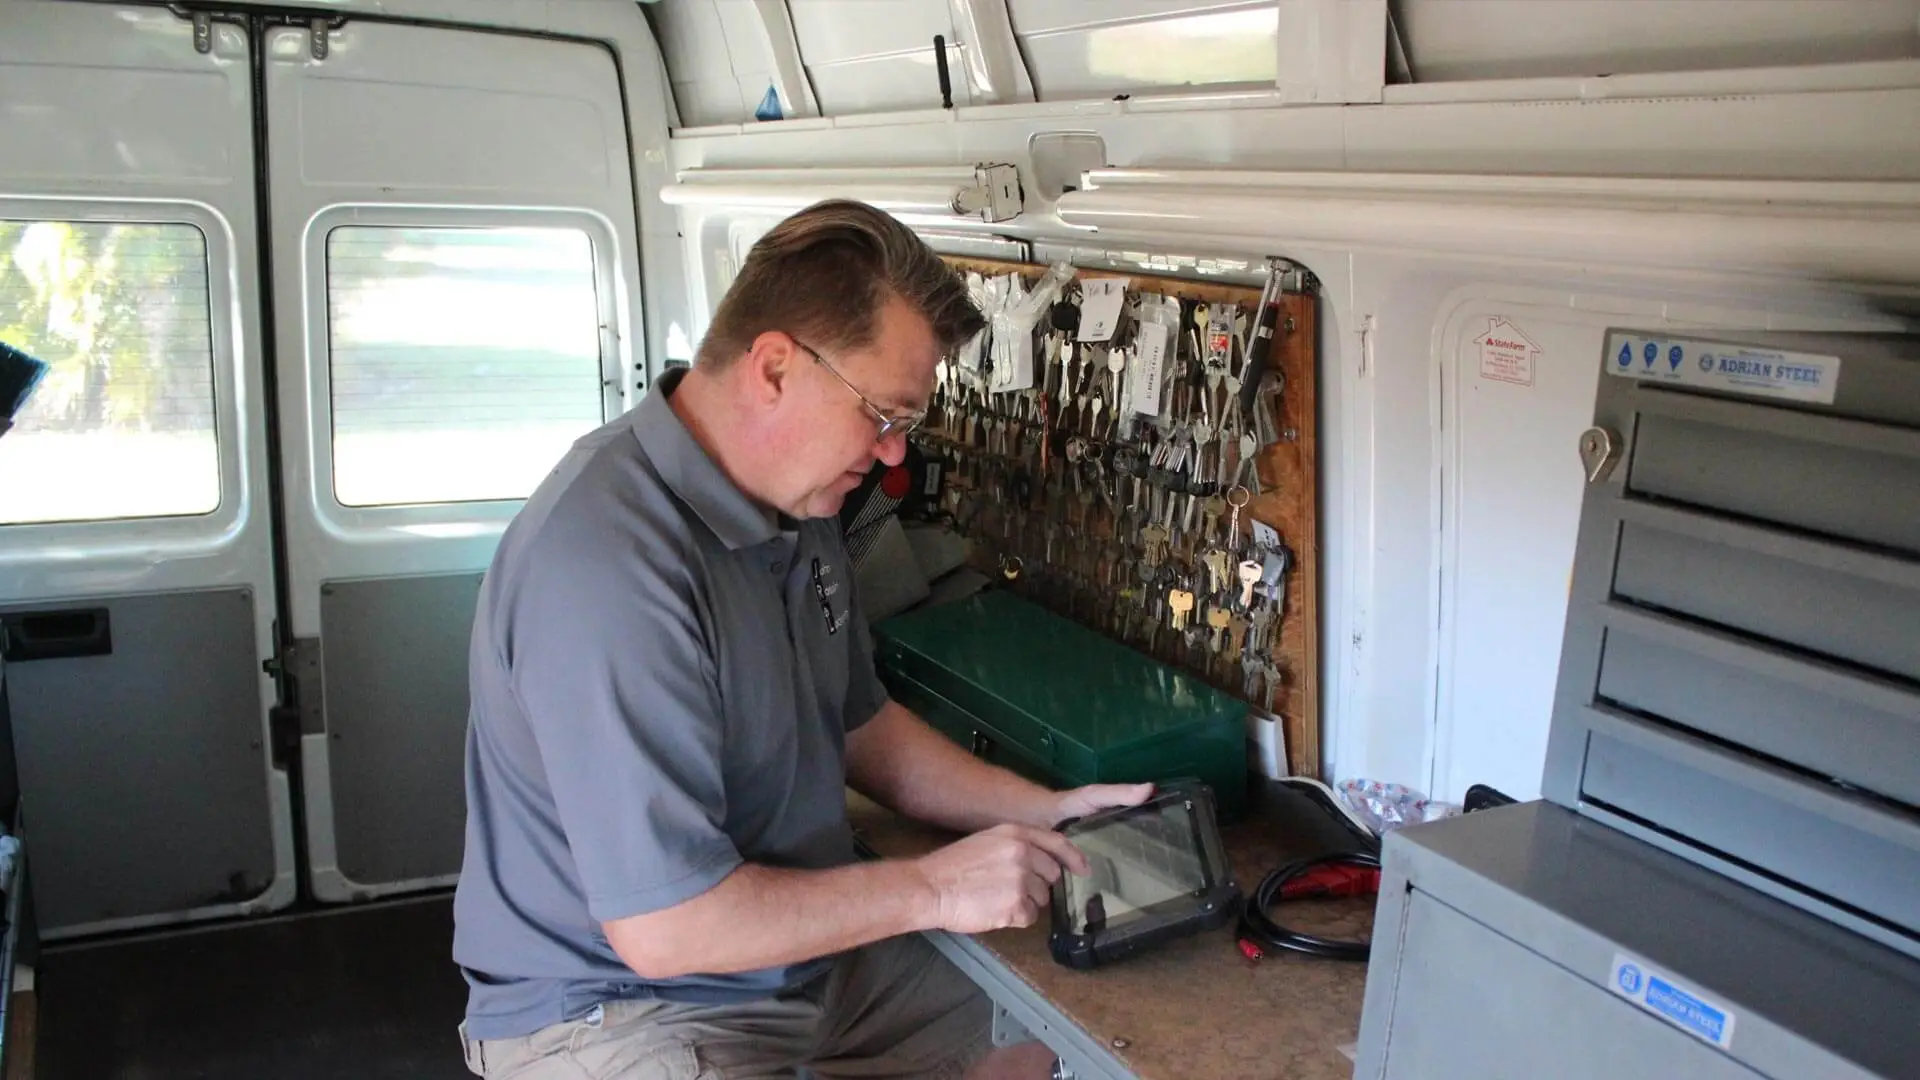 Local St. Petersburg, FL locksmith, John Rossin working in his mobile locksmith van.